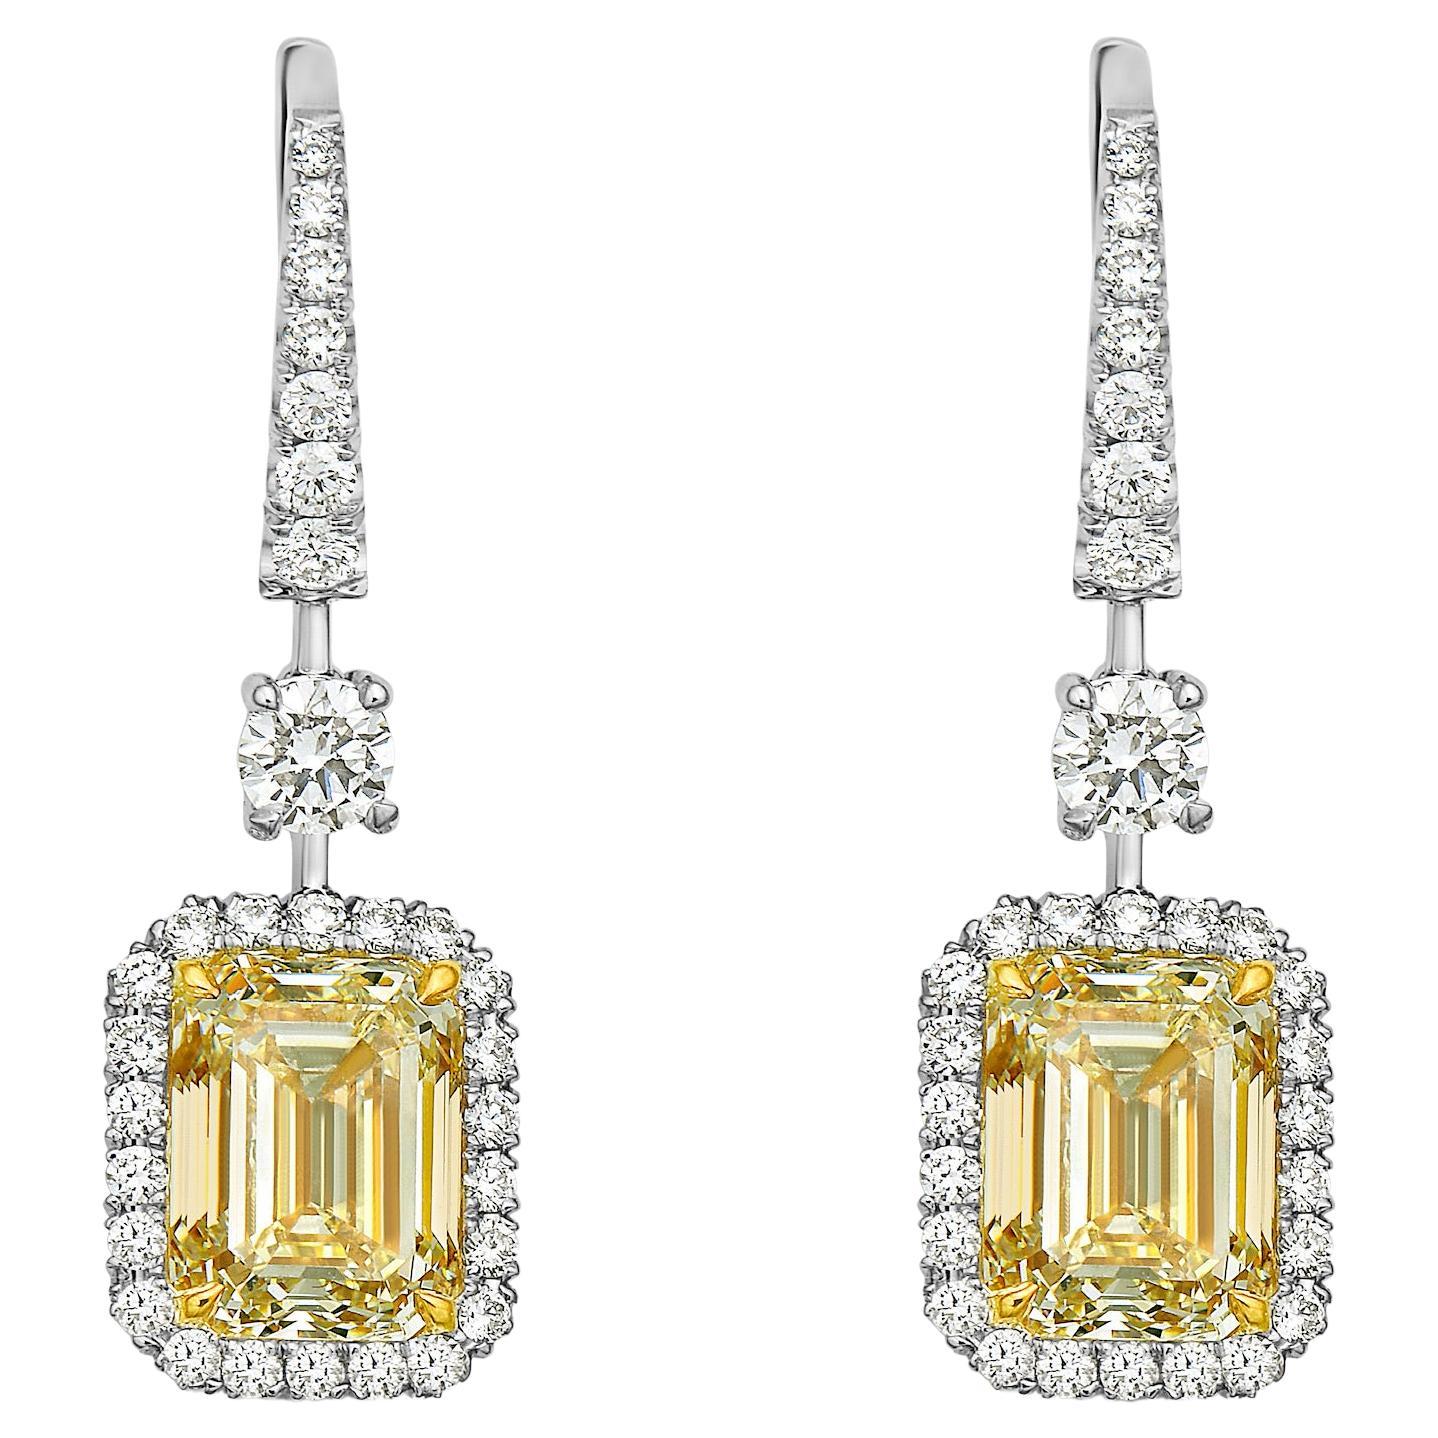 6 Carat GIA Light Yellow Emerald Cut Diamond Earrings For Sale